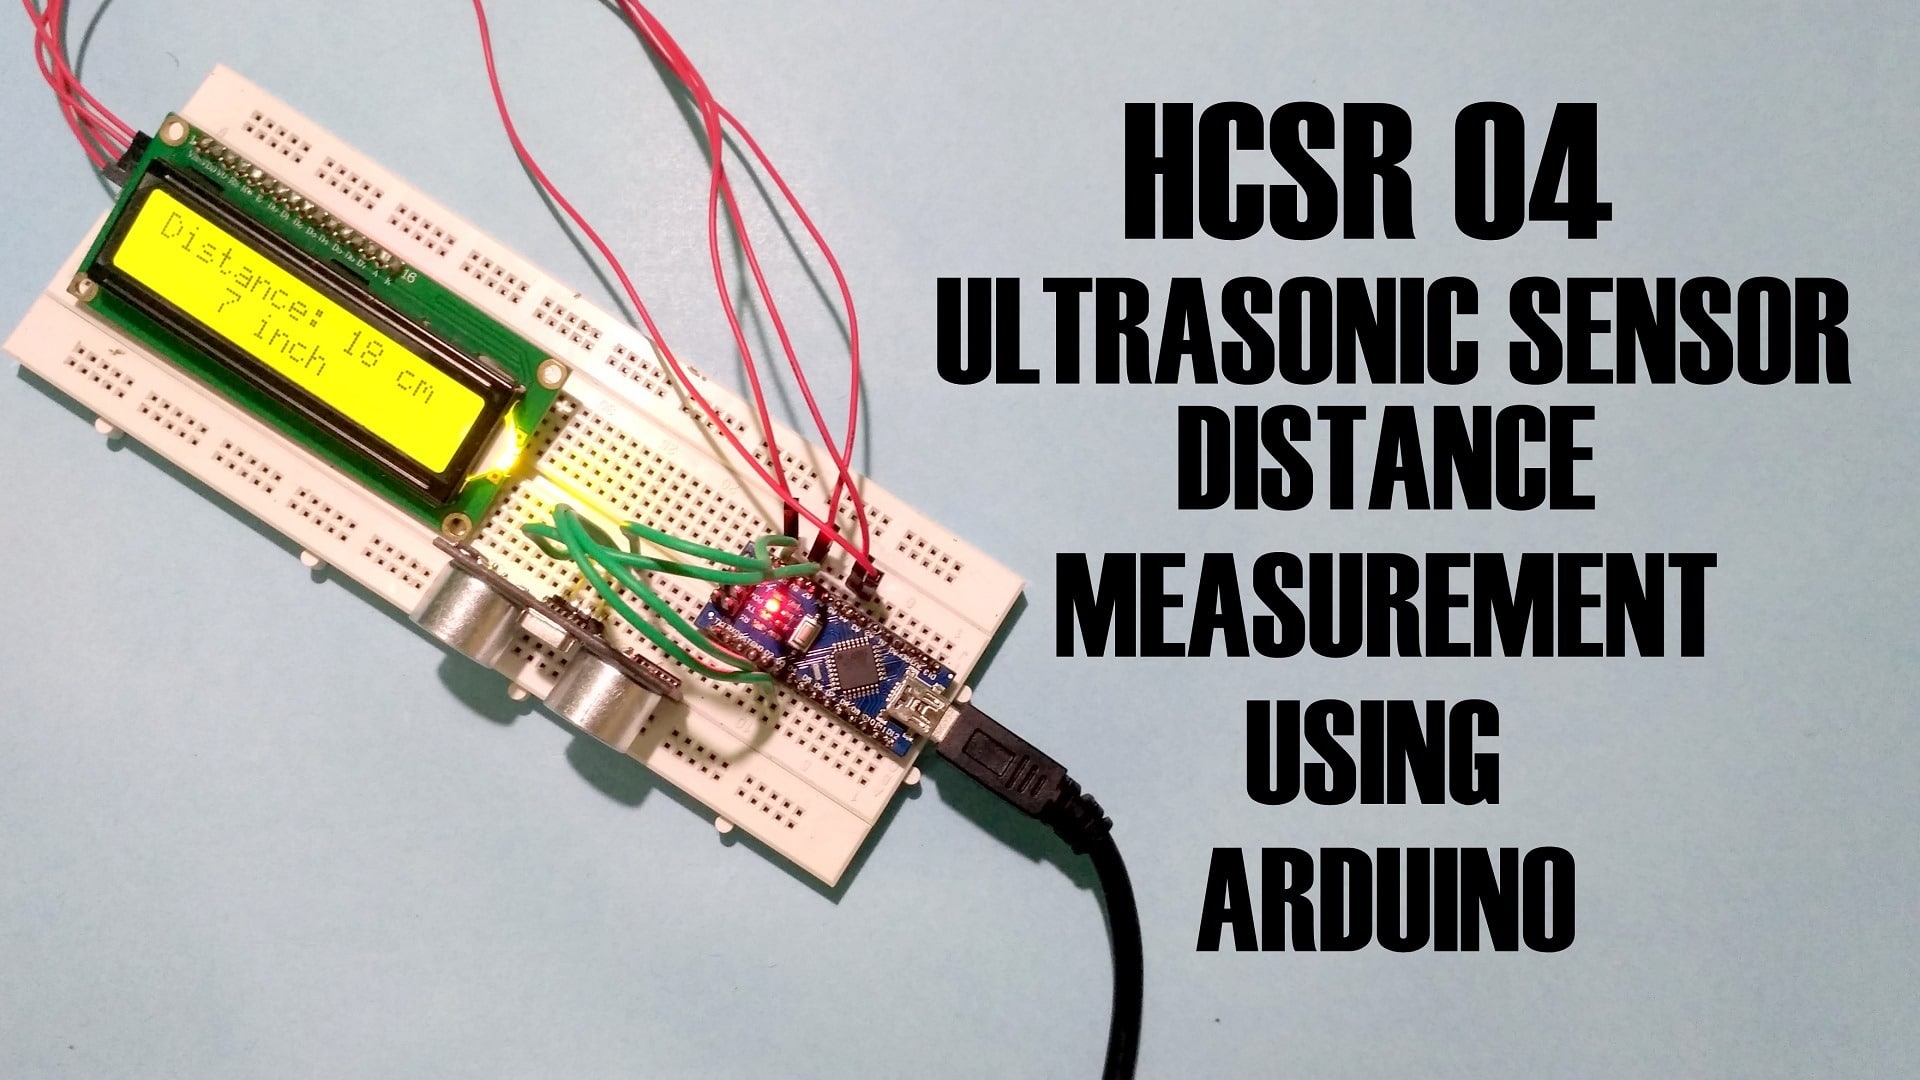 Distance Measurement using Ultrasonic Sensor